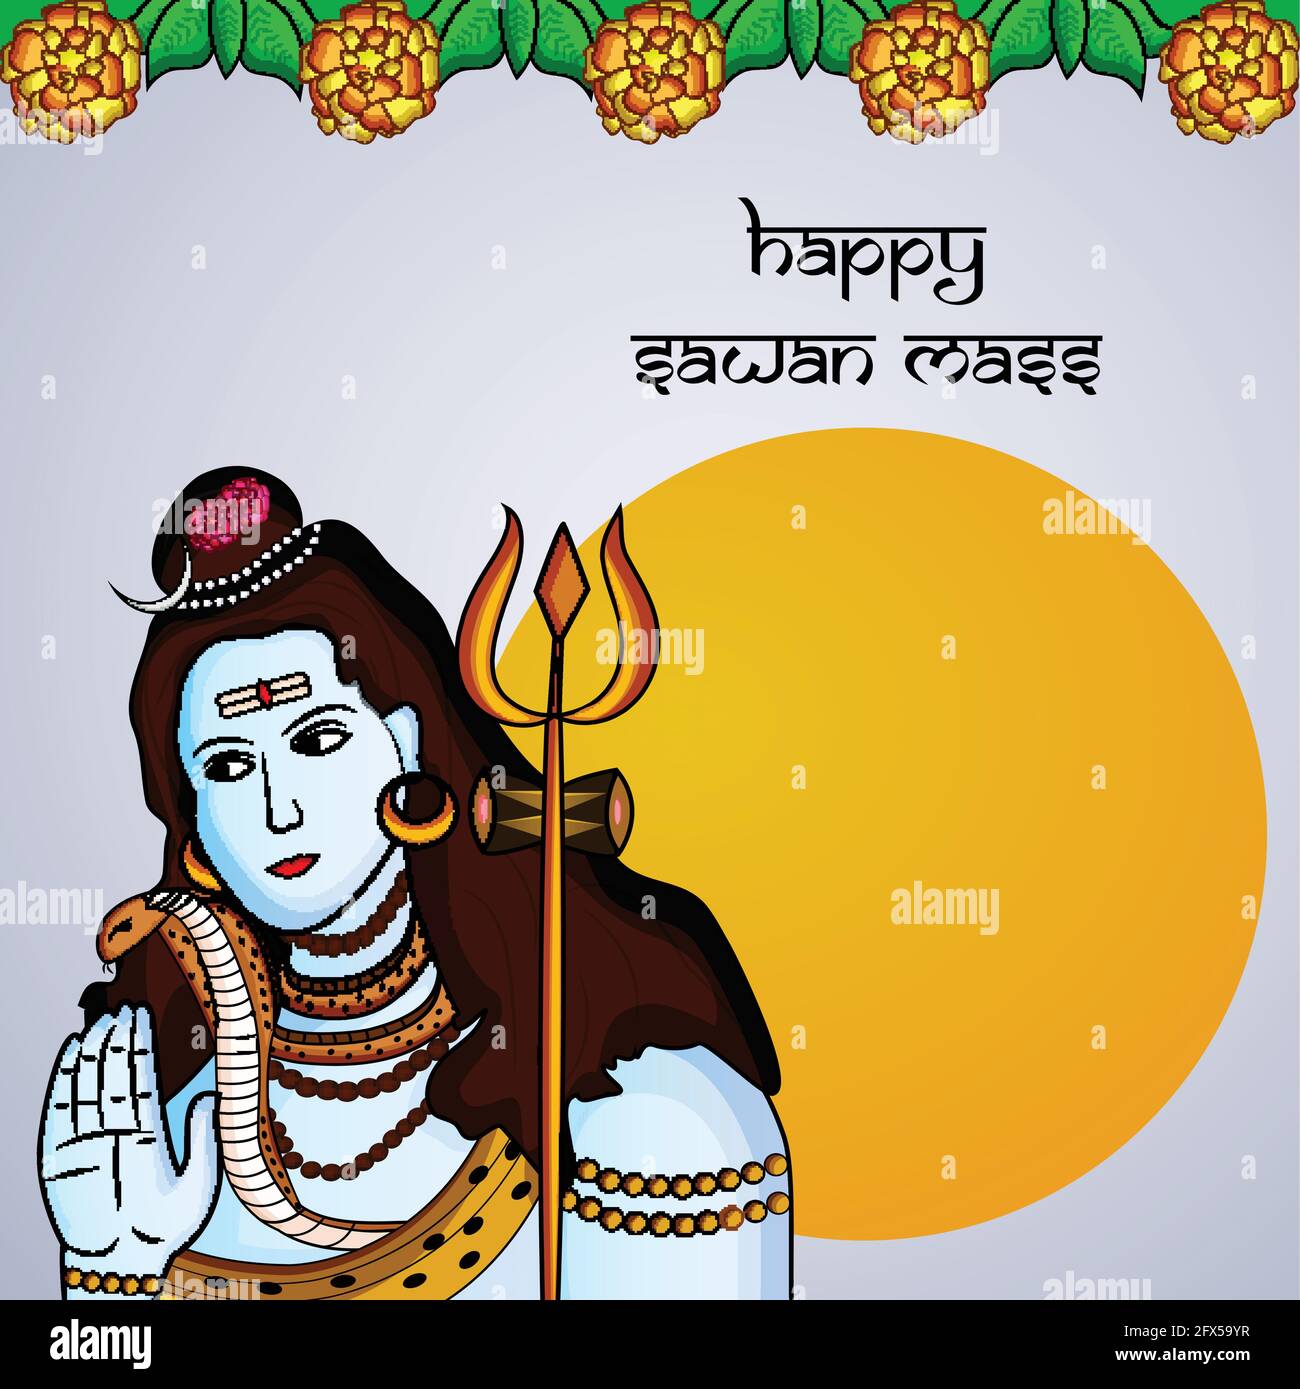 Sawan Mass Hindu Festival Background Stock Vector Image & Art - Alamy